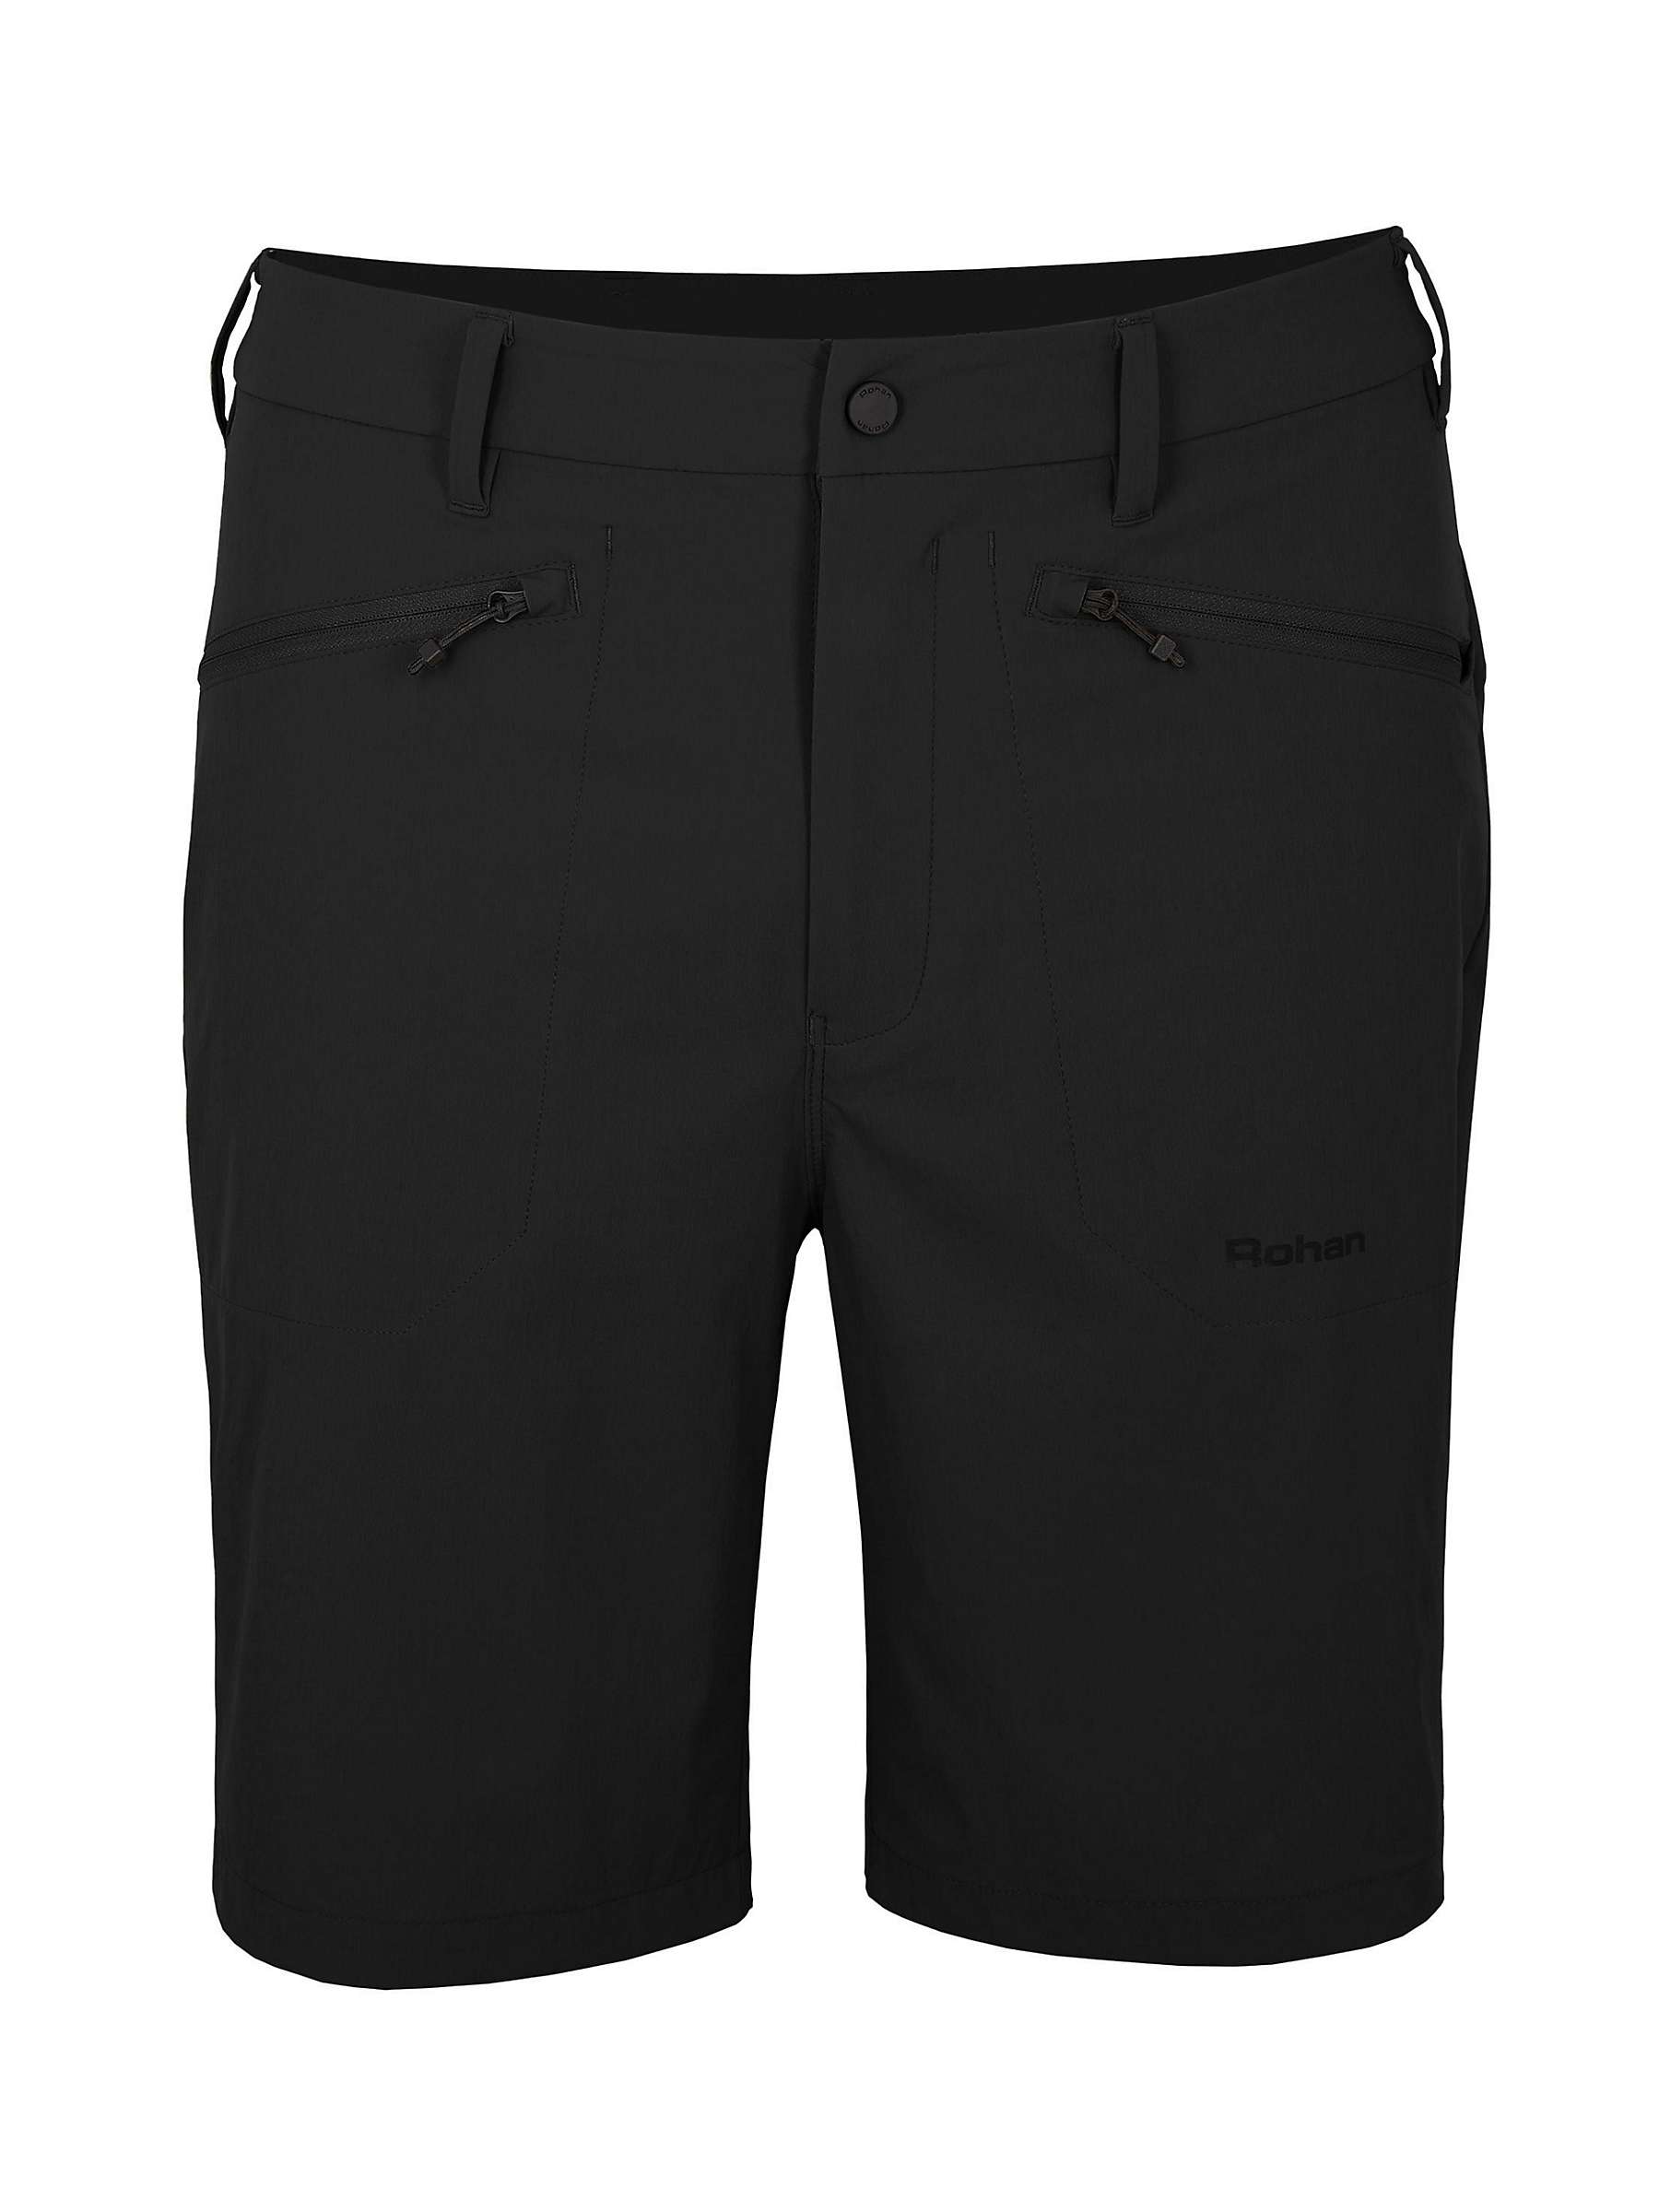 Buy Rohan Vista Lightweight Walking Shorts Online at johnlewis.com